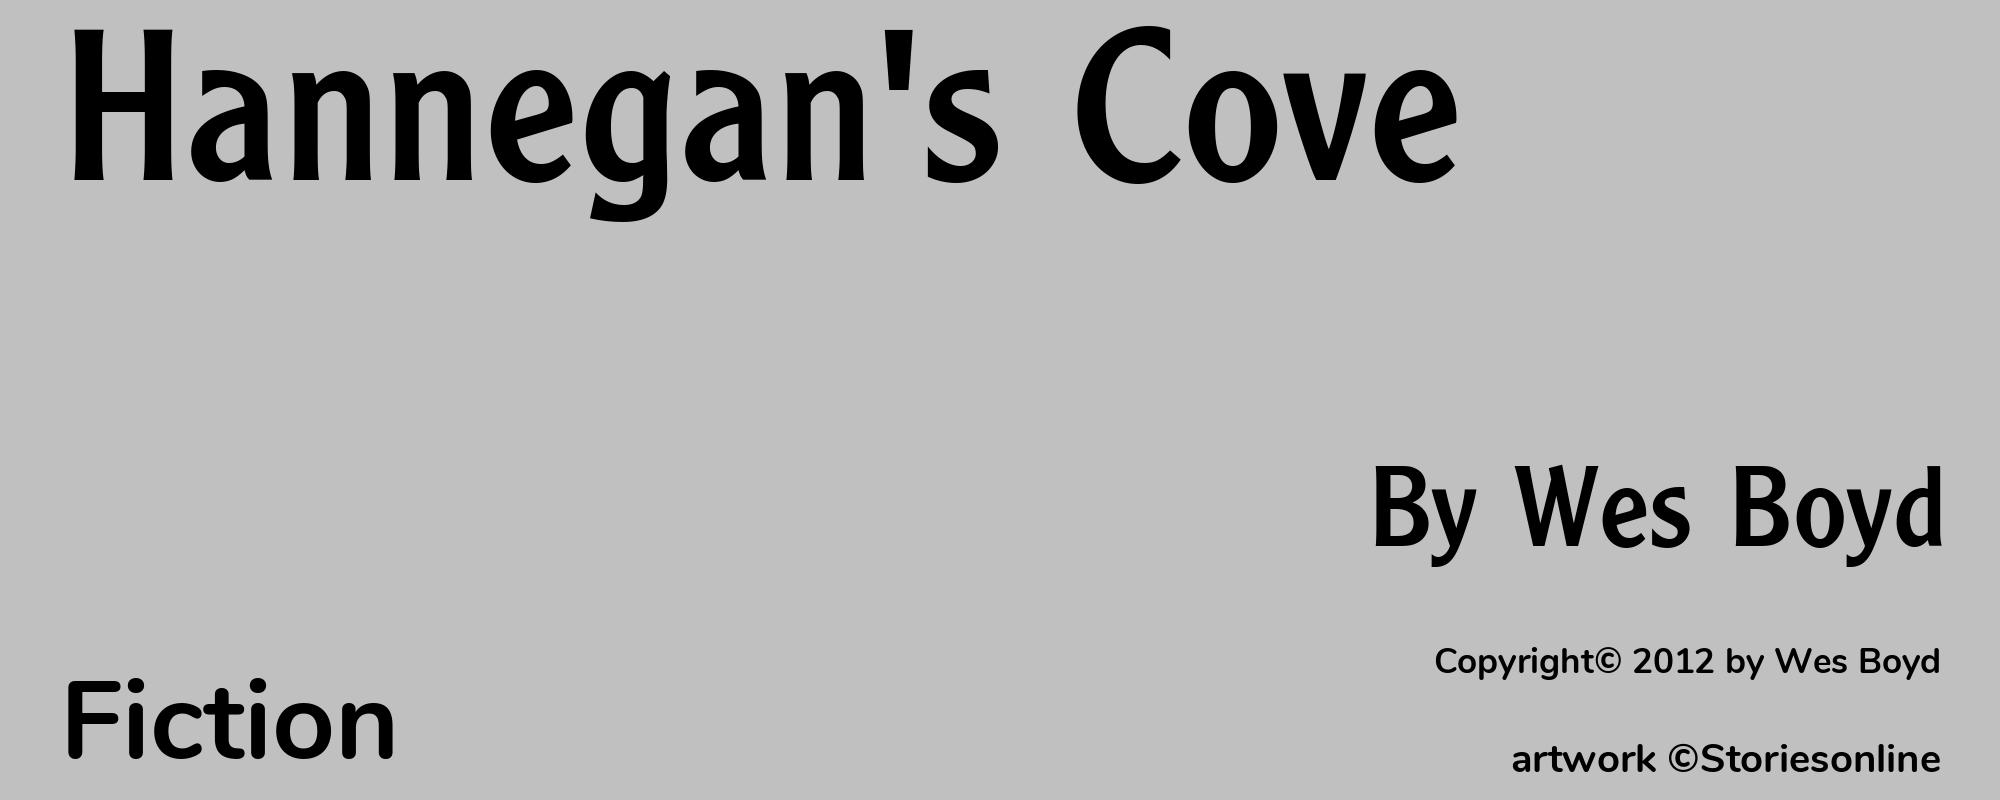 Hannegan's Cove - Cover